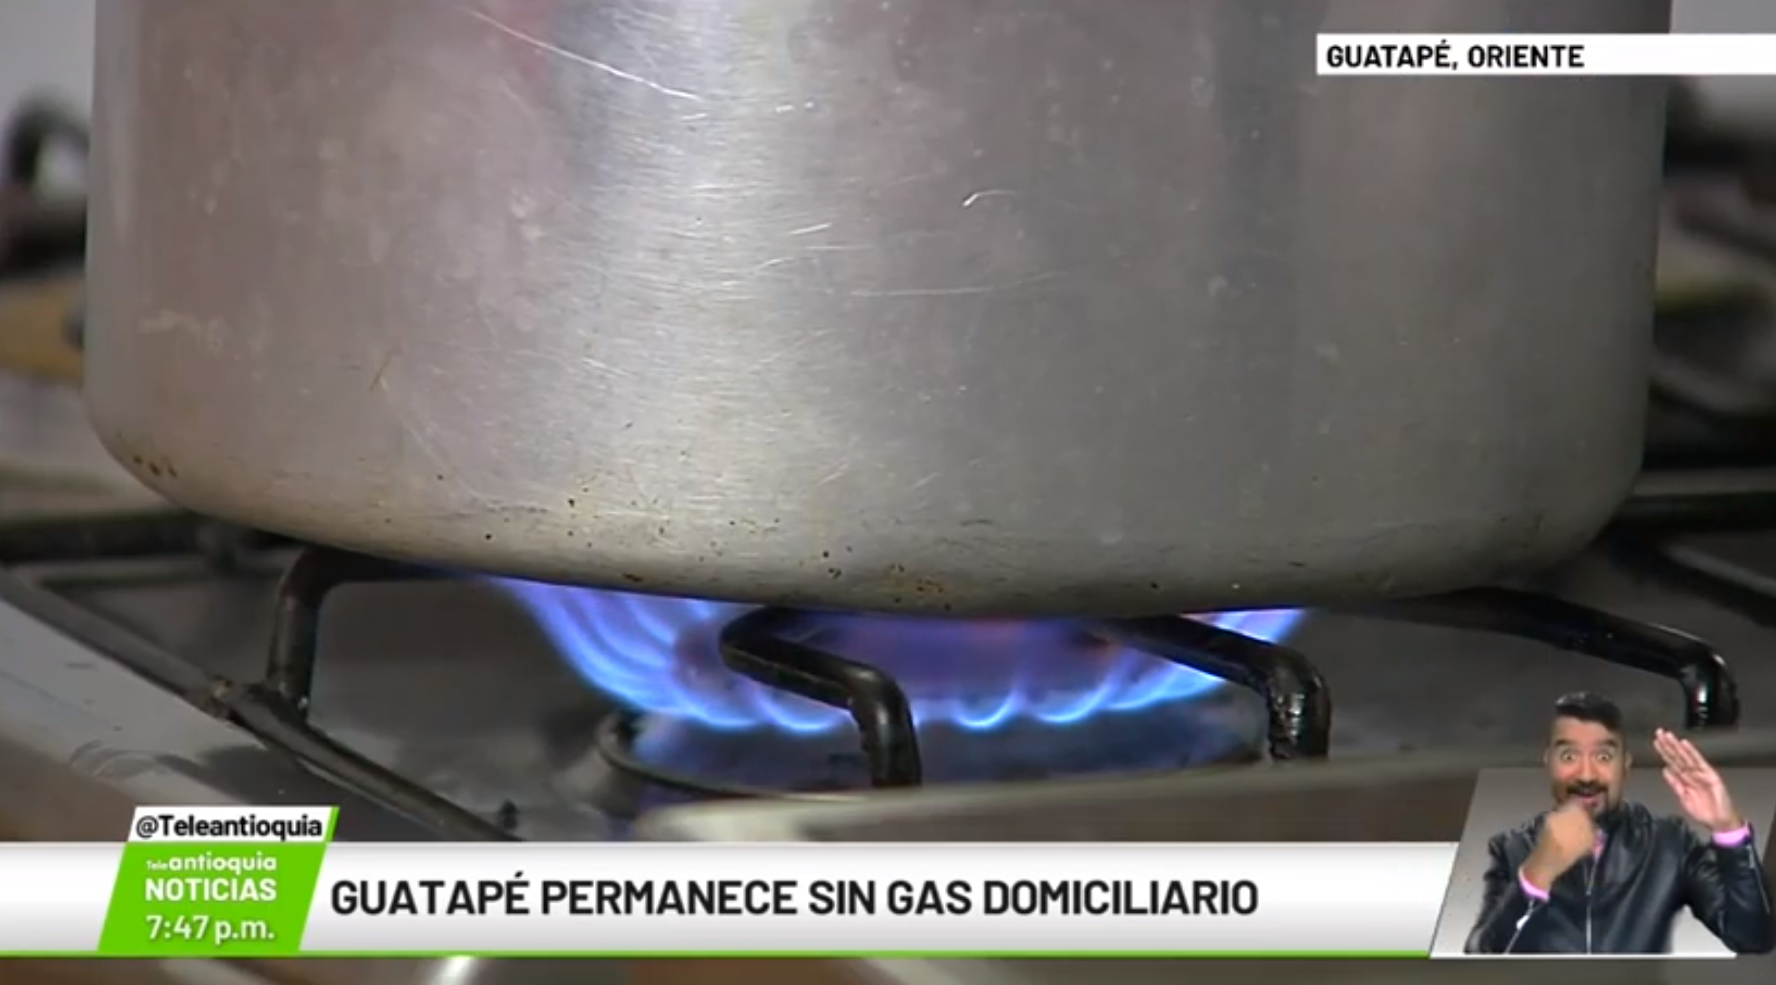 Guatapé permanece sin gas domiciliario